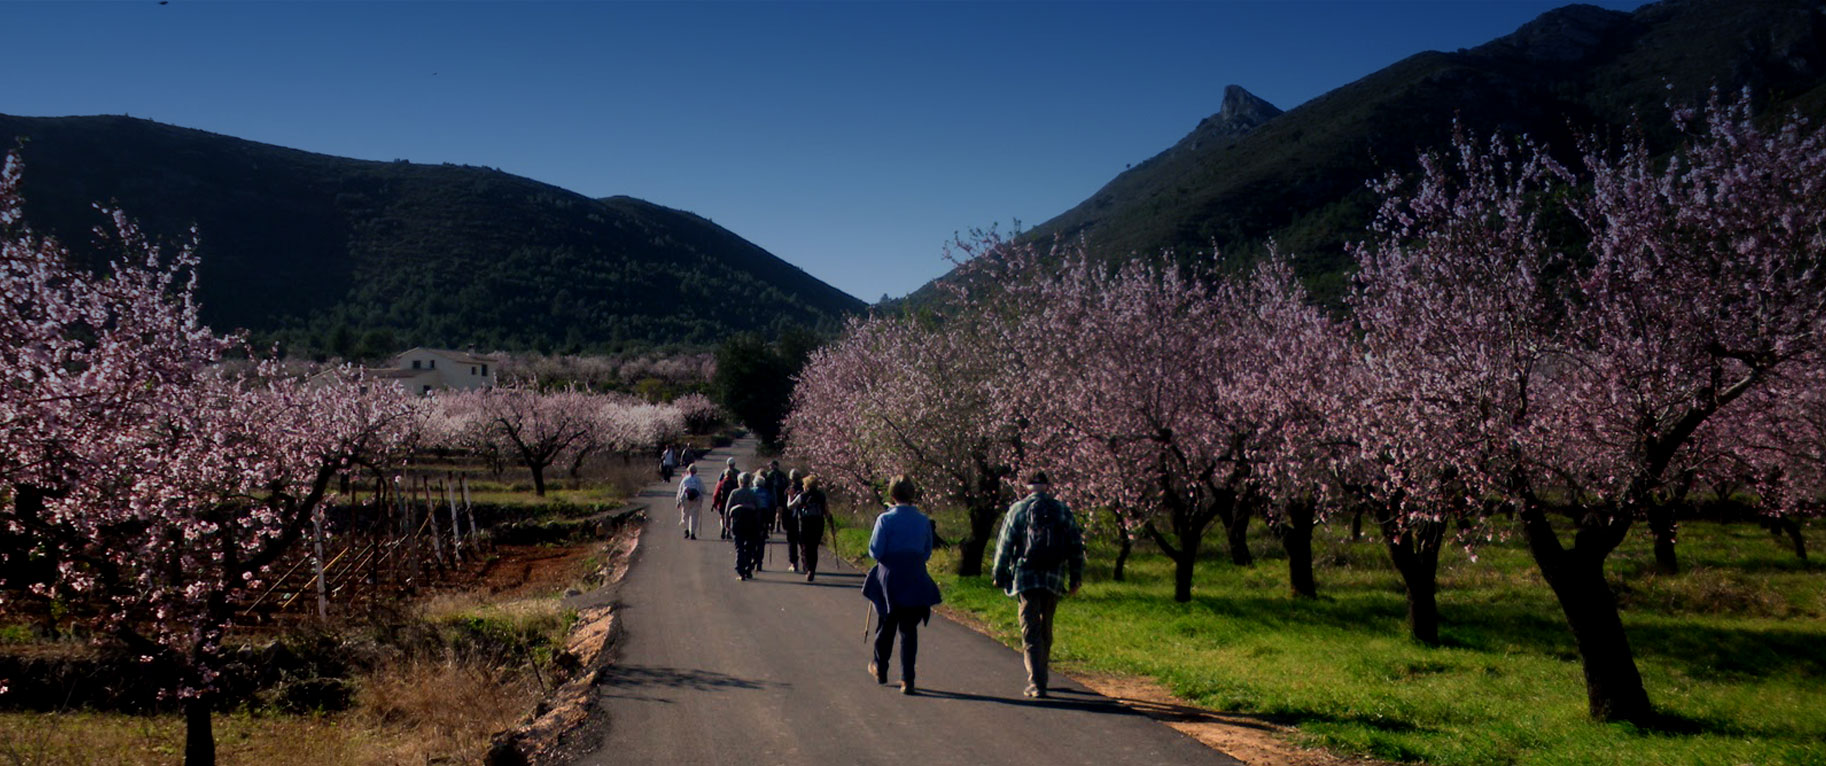 Ruta #AlcalalíEnFlor almendros en flor Feslalí - Alcalalí turismo